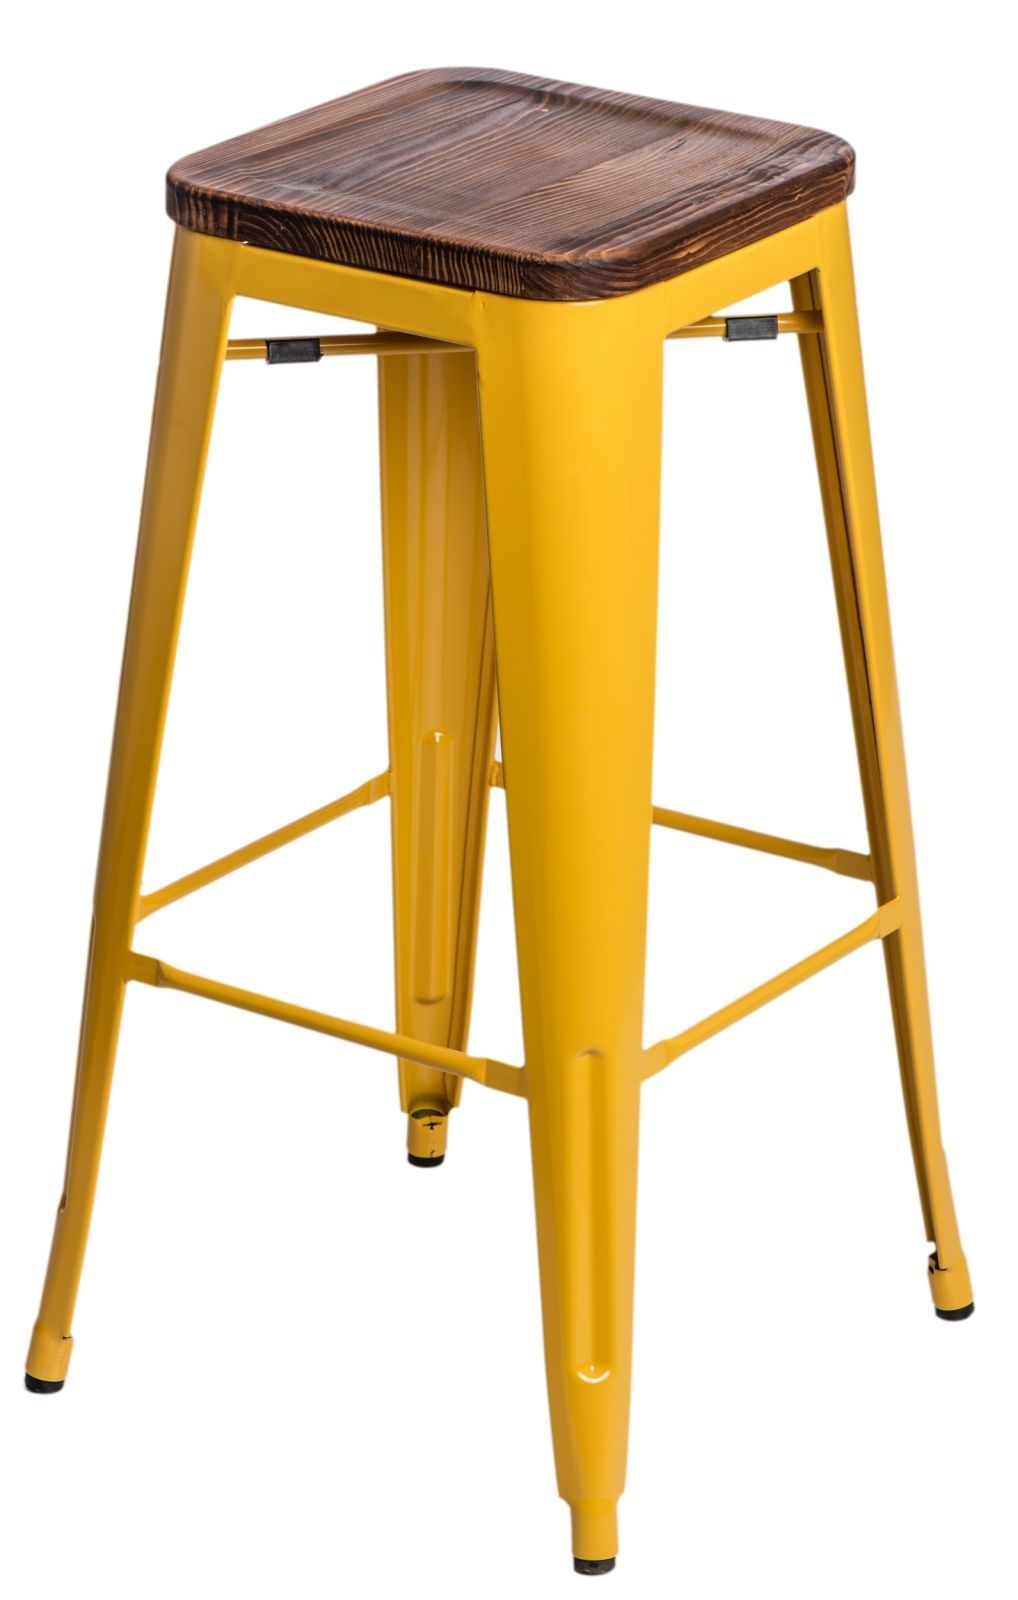  Barová stolička Paris Wood 75cm žltá sosna - mobler.sk